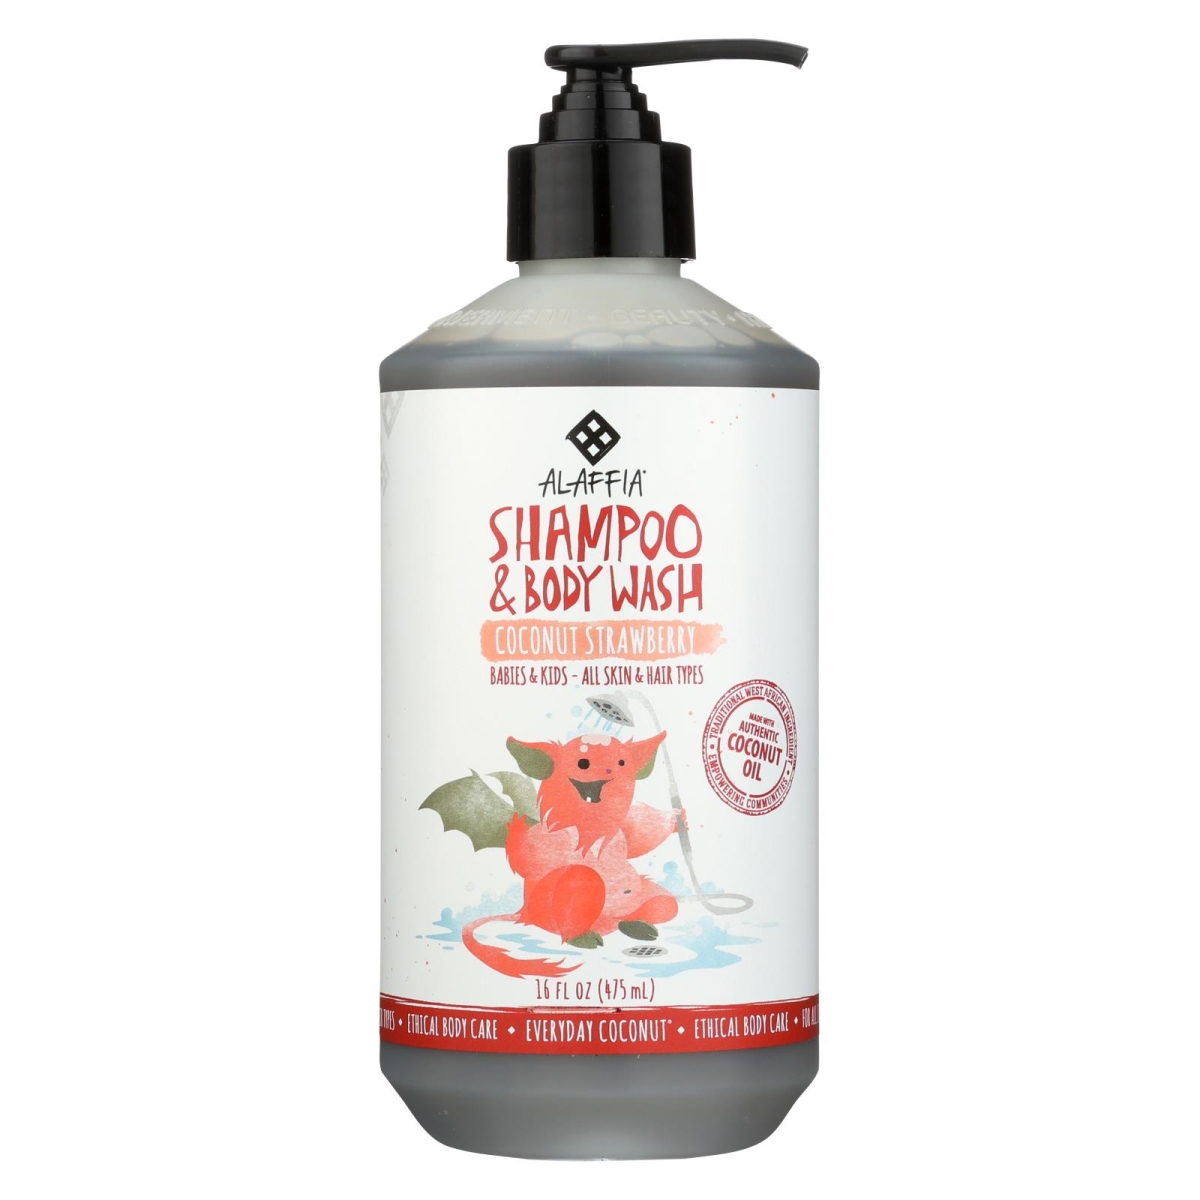 2090777 16 Fl Oz Coconut Strawberry Everyday Shampoo & Body Wash